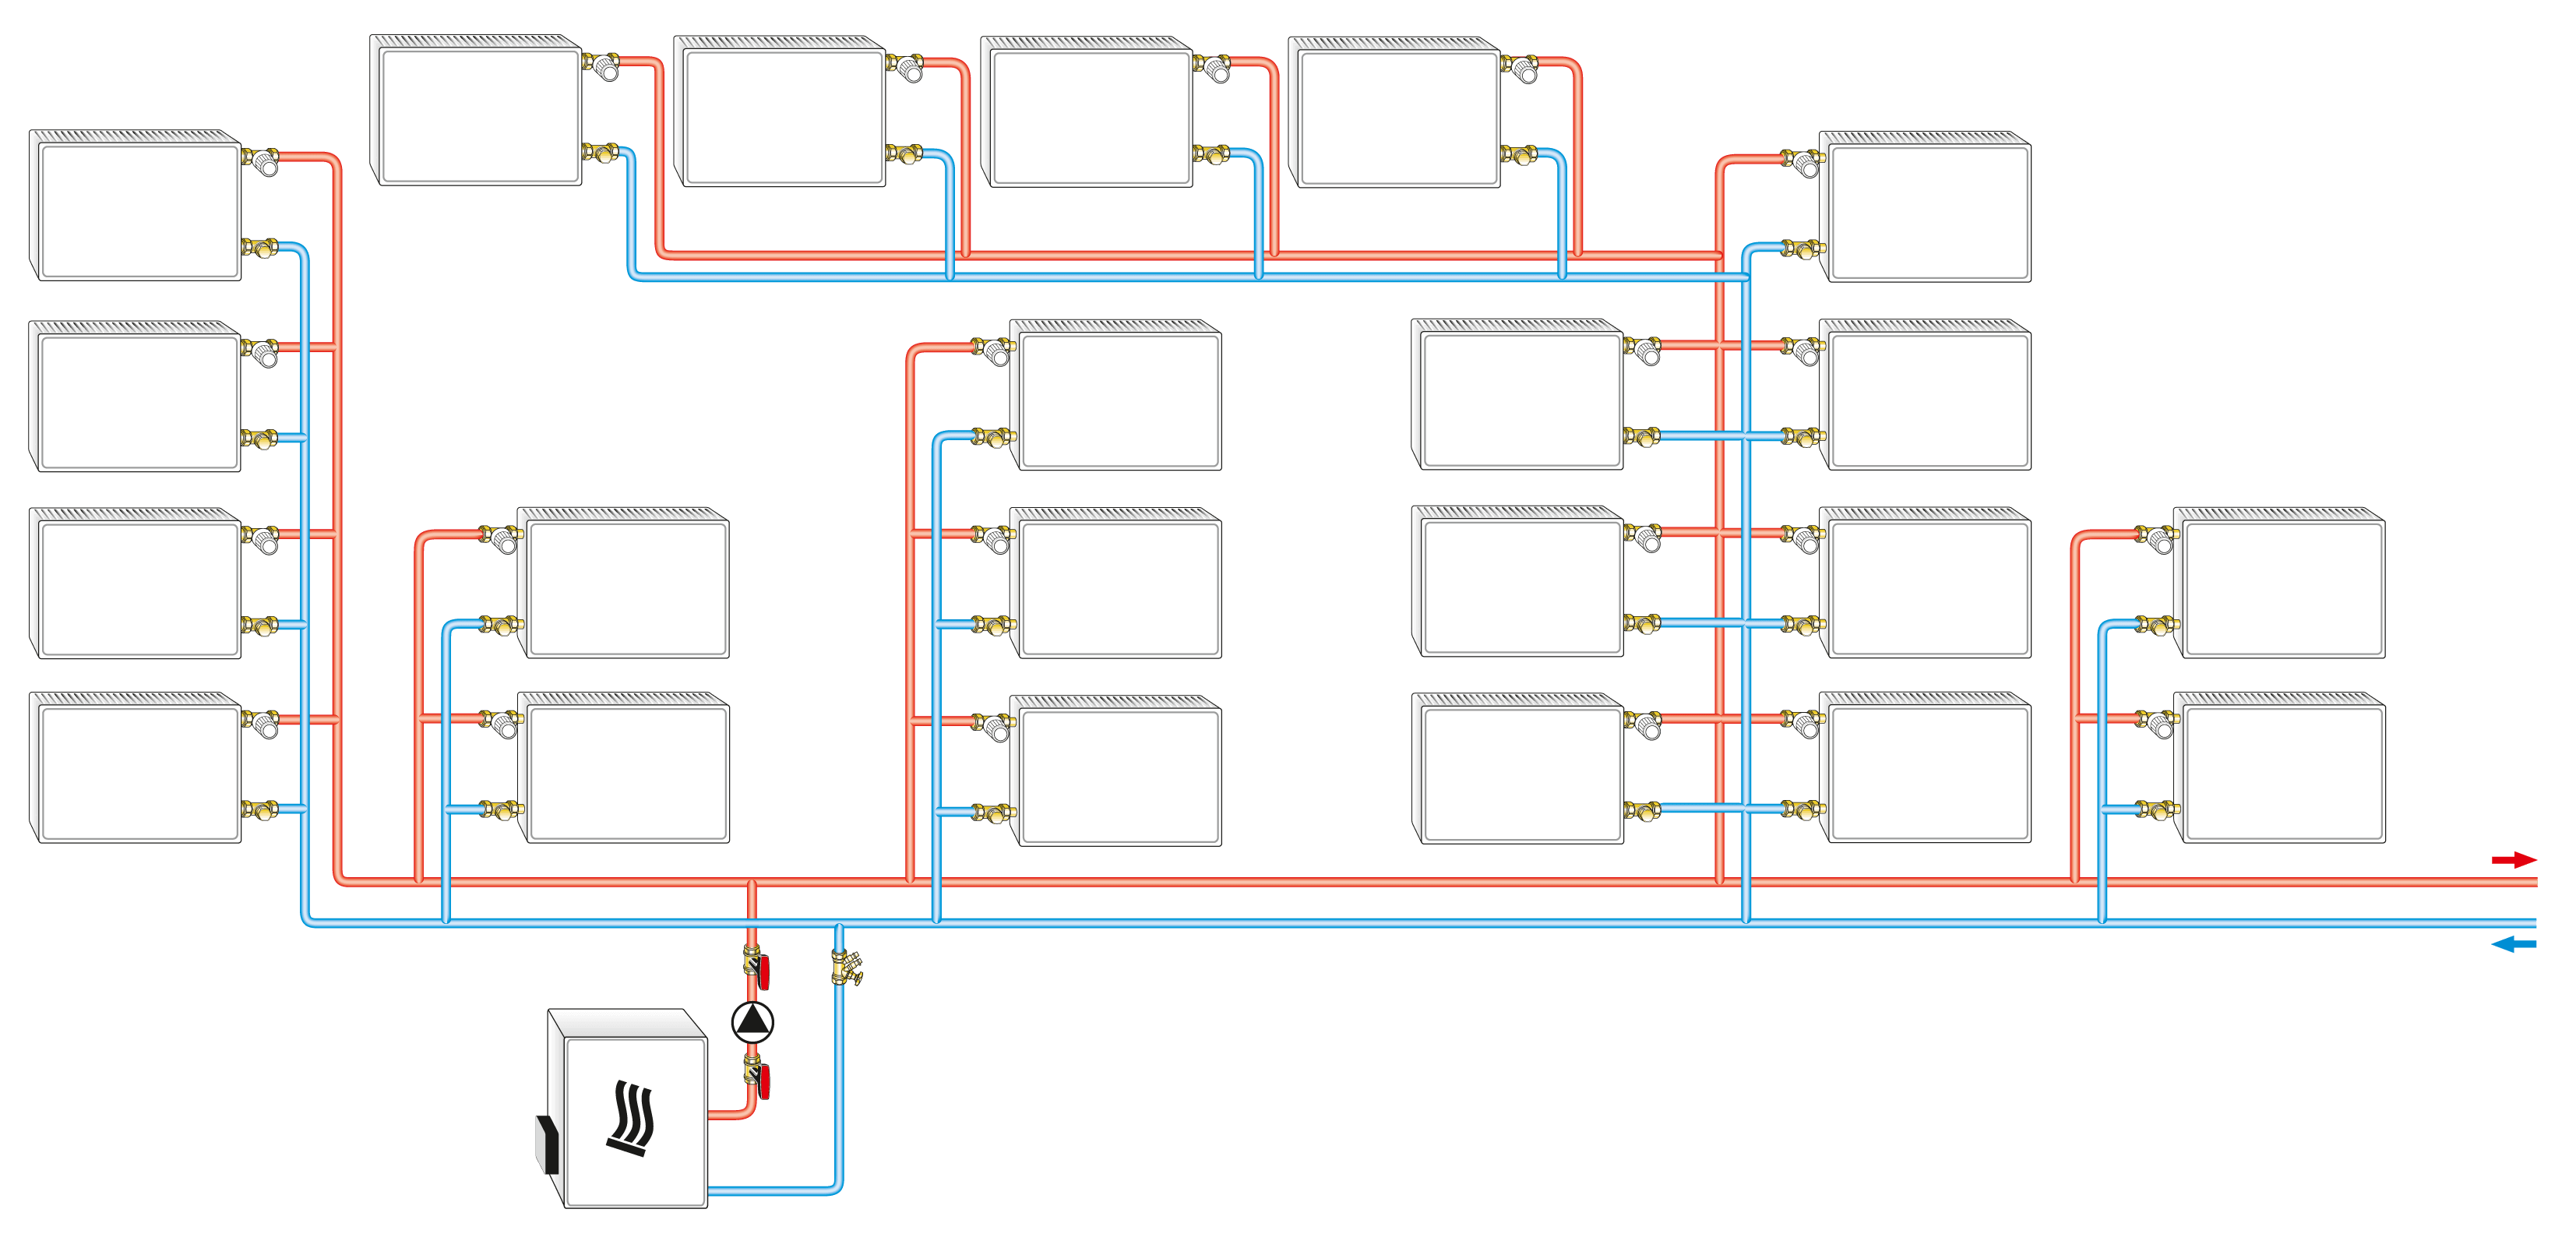 System image